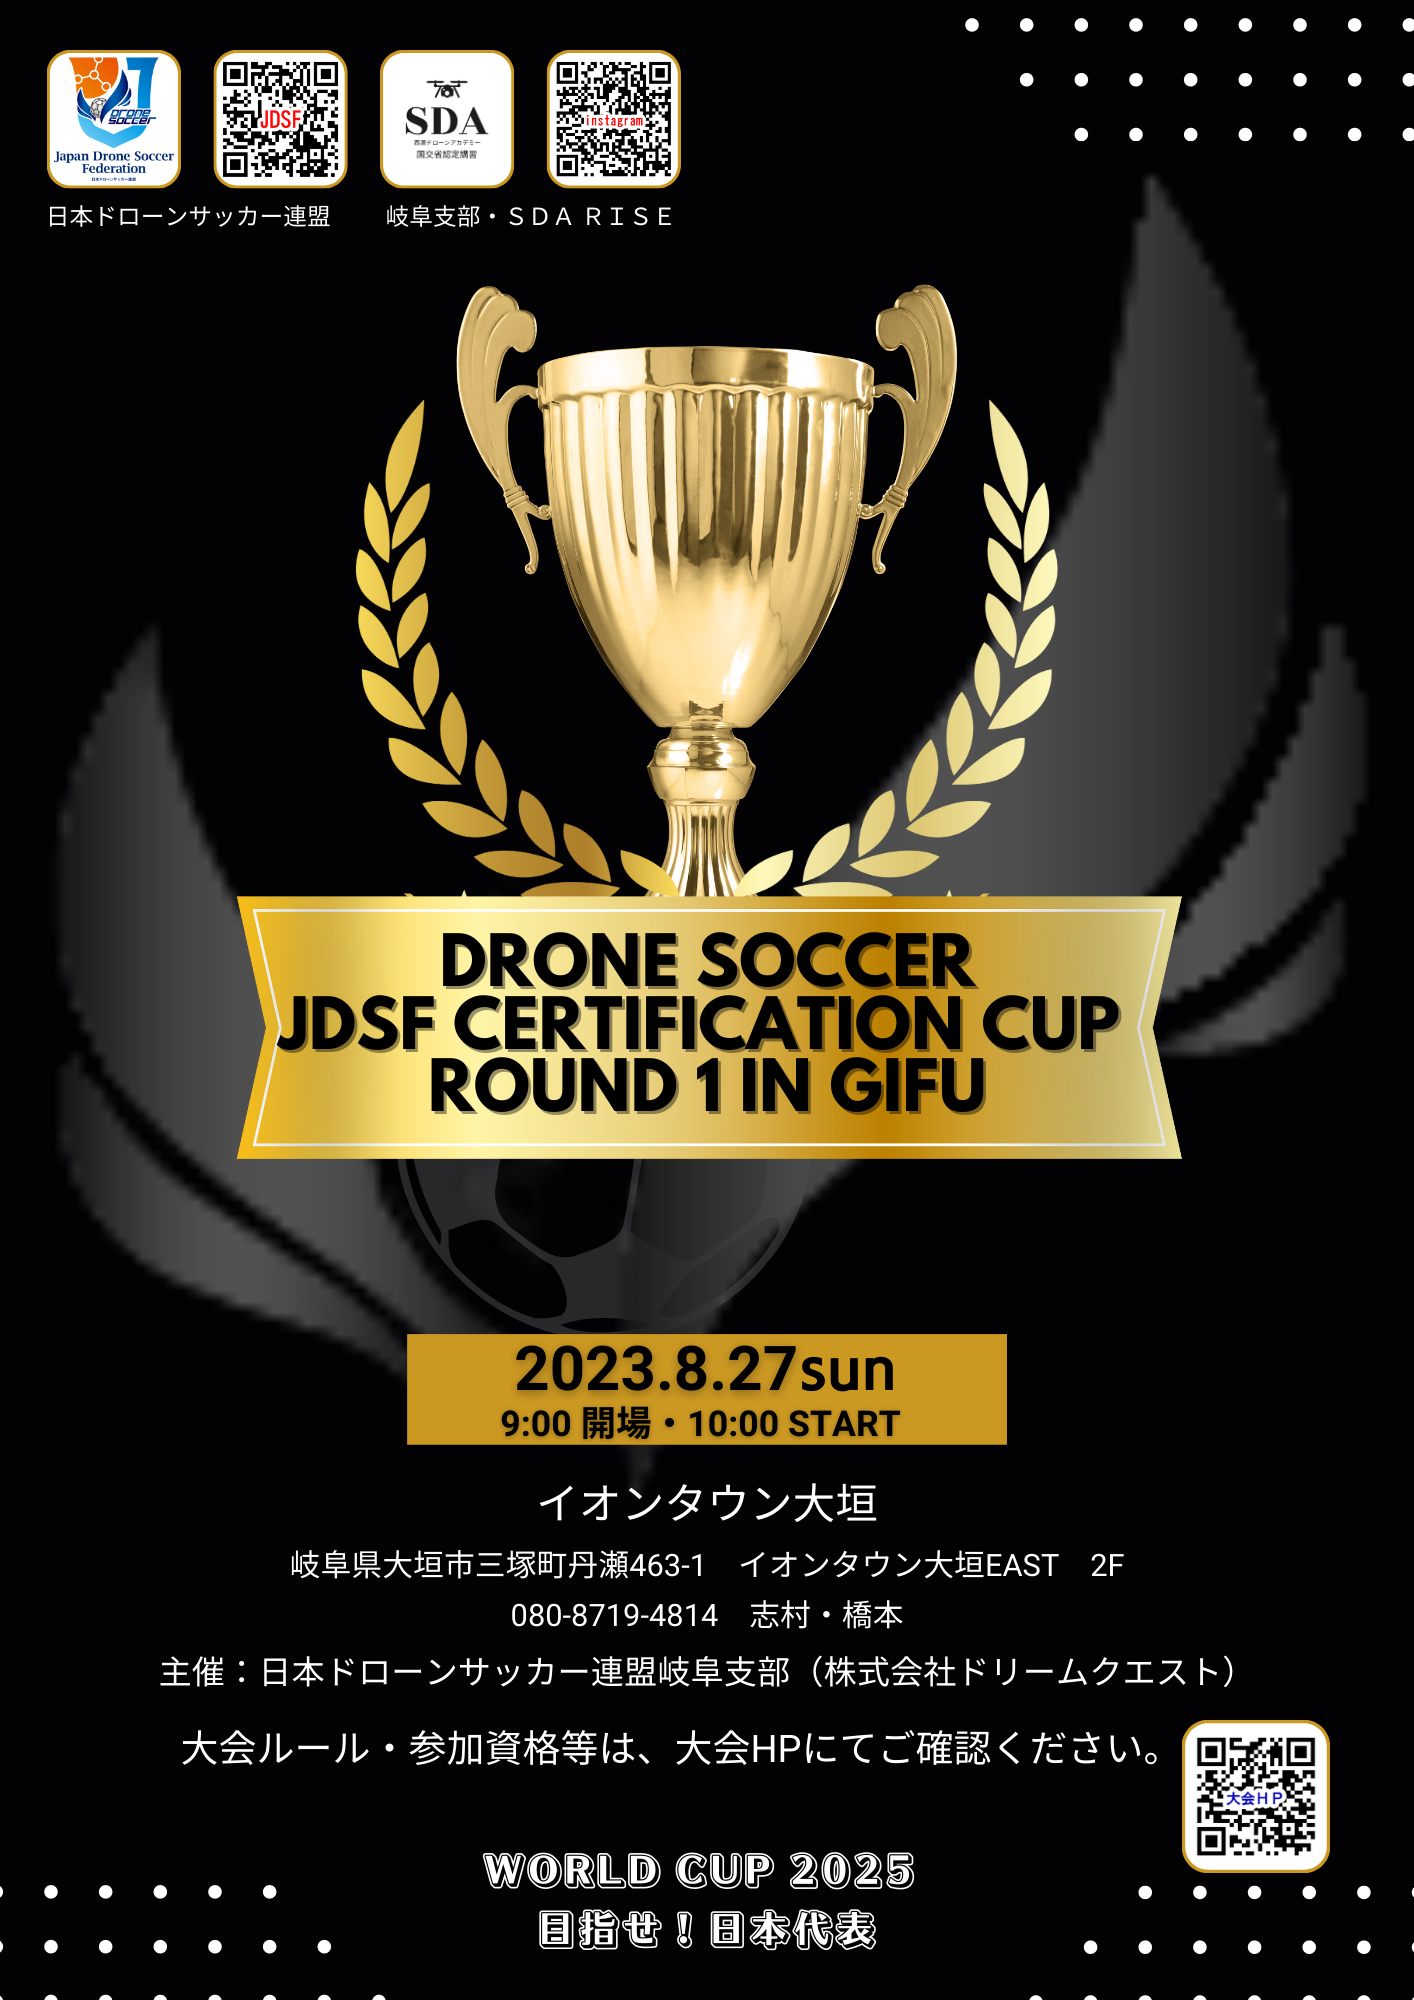 CJÁIh[TbJ[AF莎uJDSF Certification Cup@Round 1 in GIFUv8/27()J